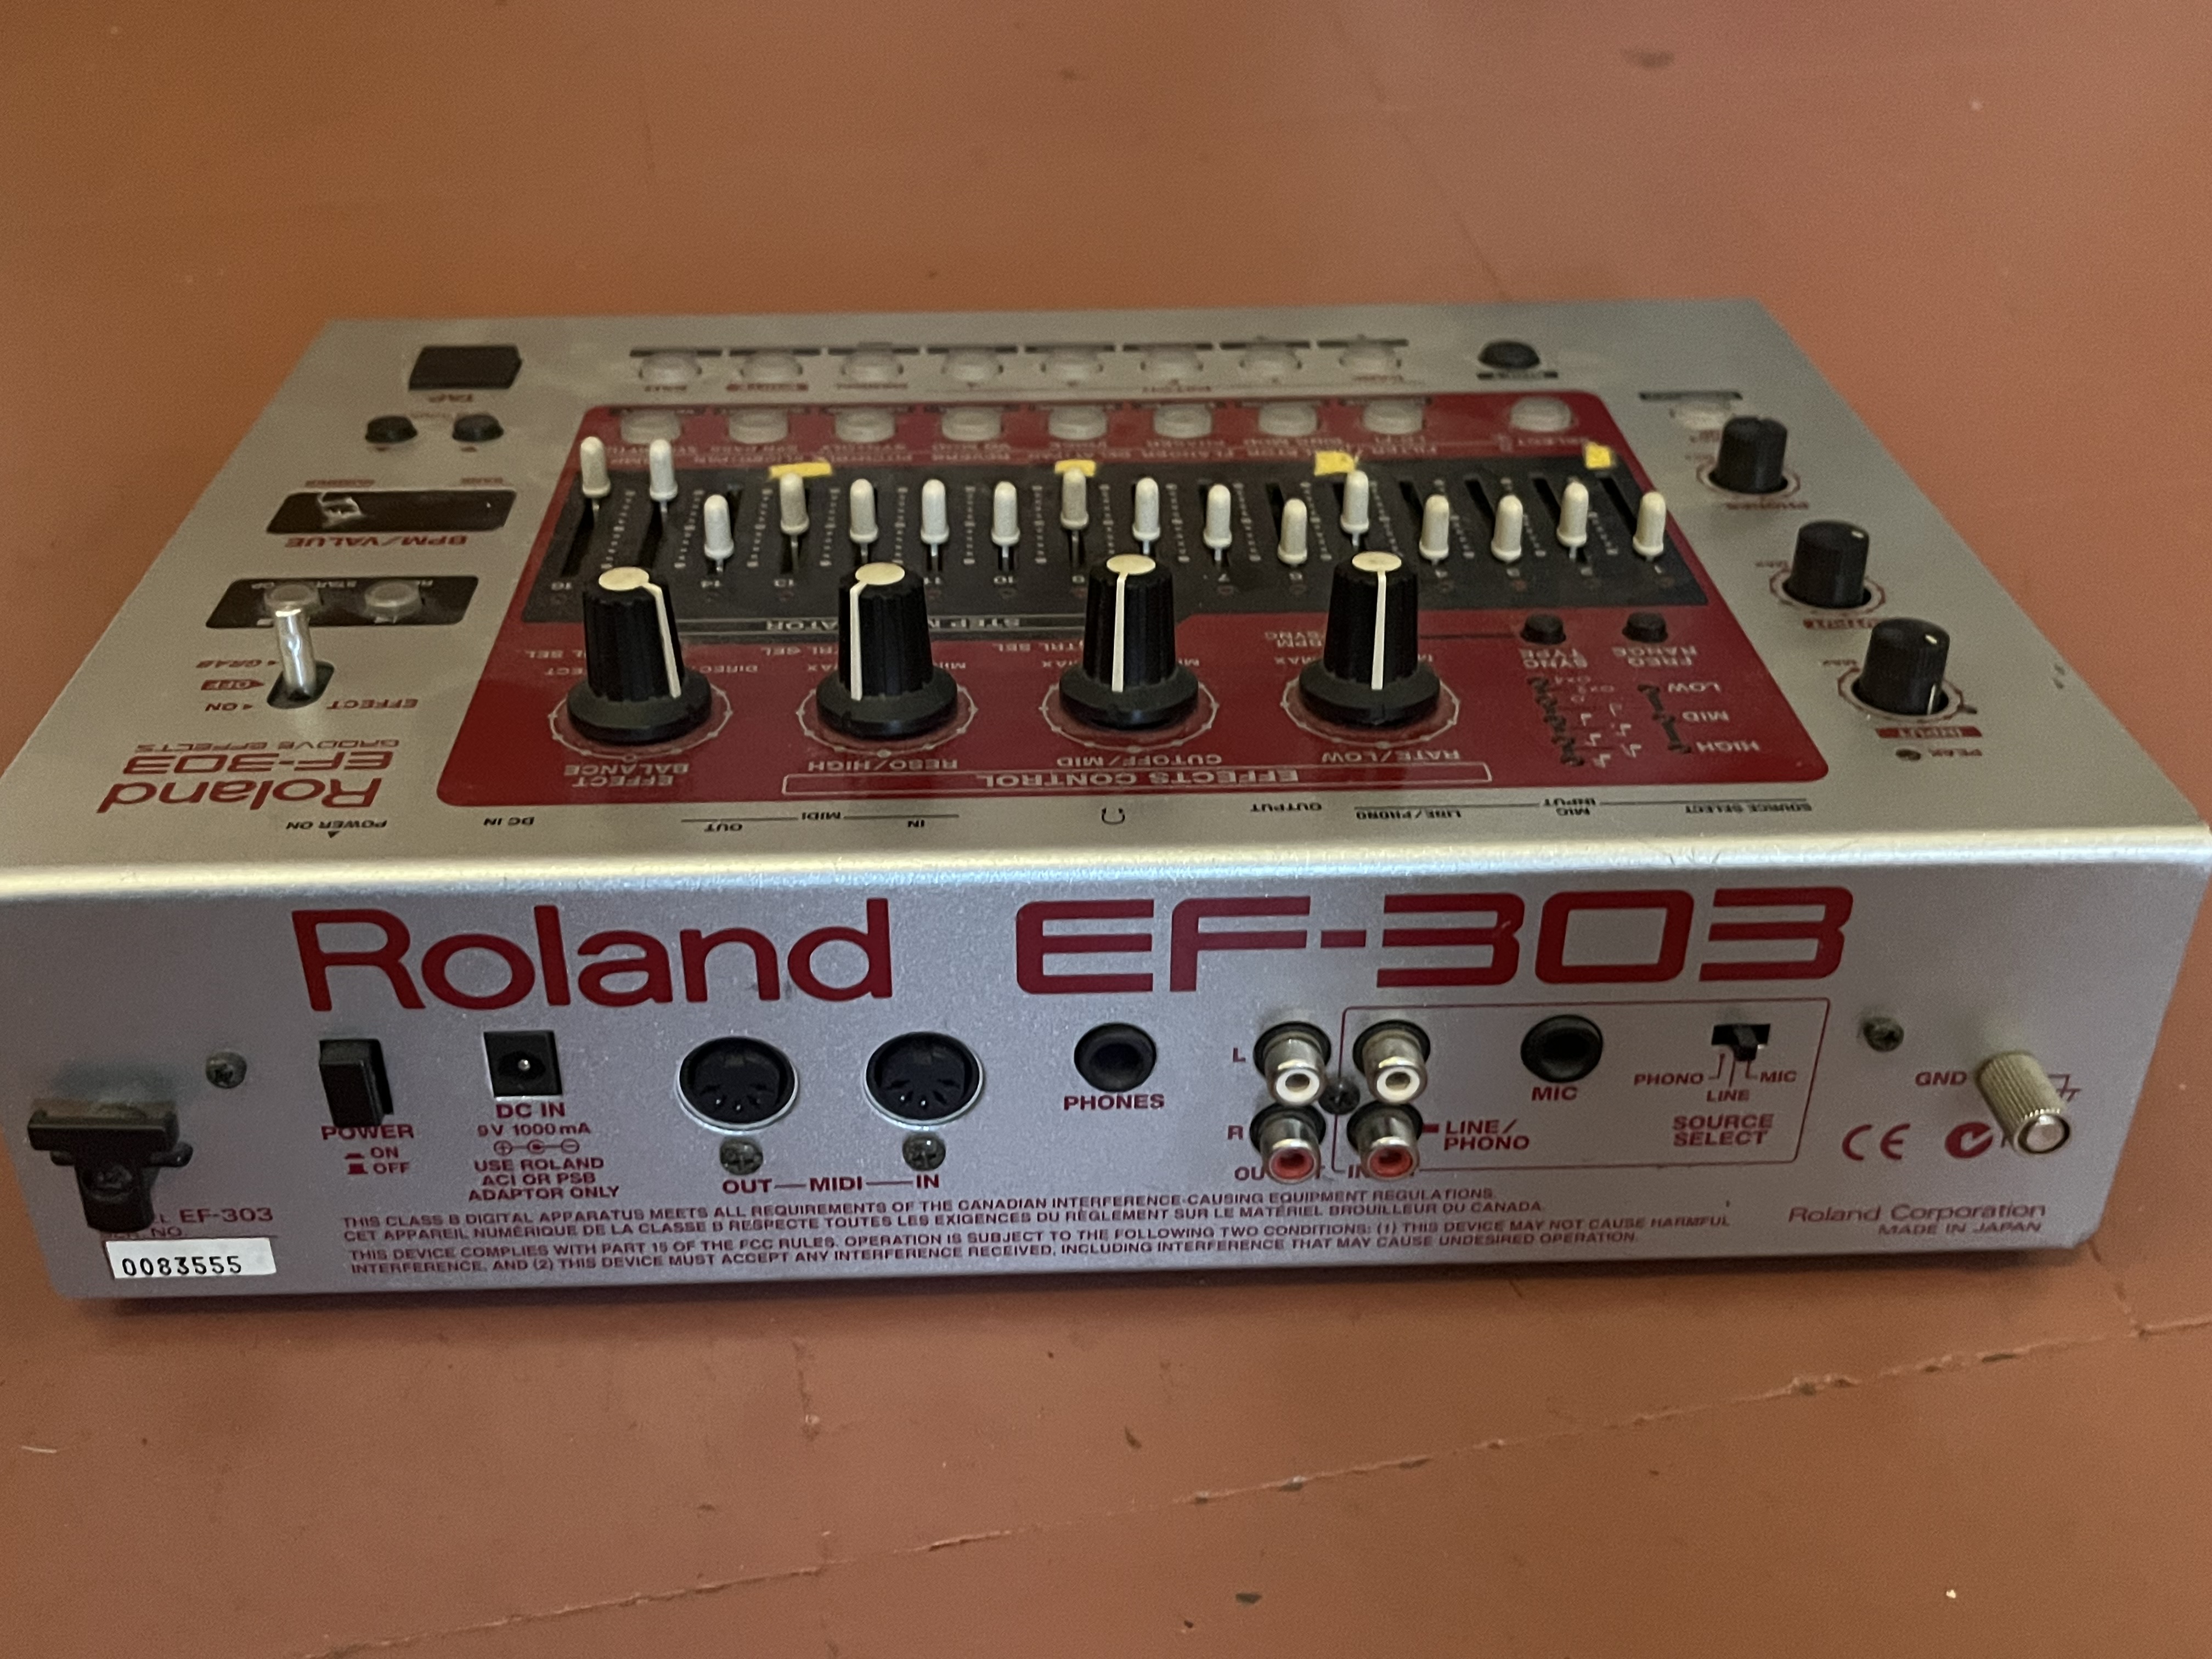 EF-303 - Roland EF-303 - Audiofanzine